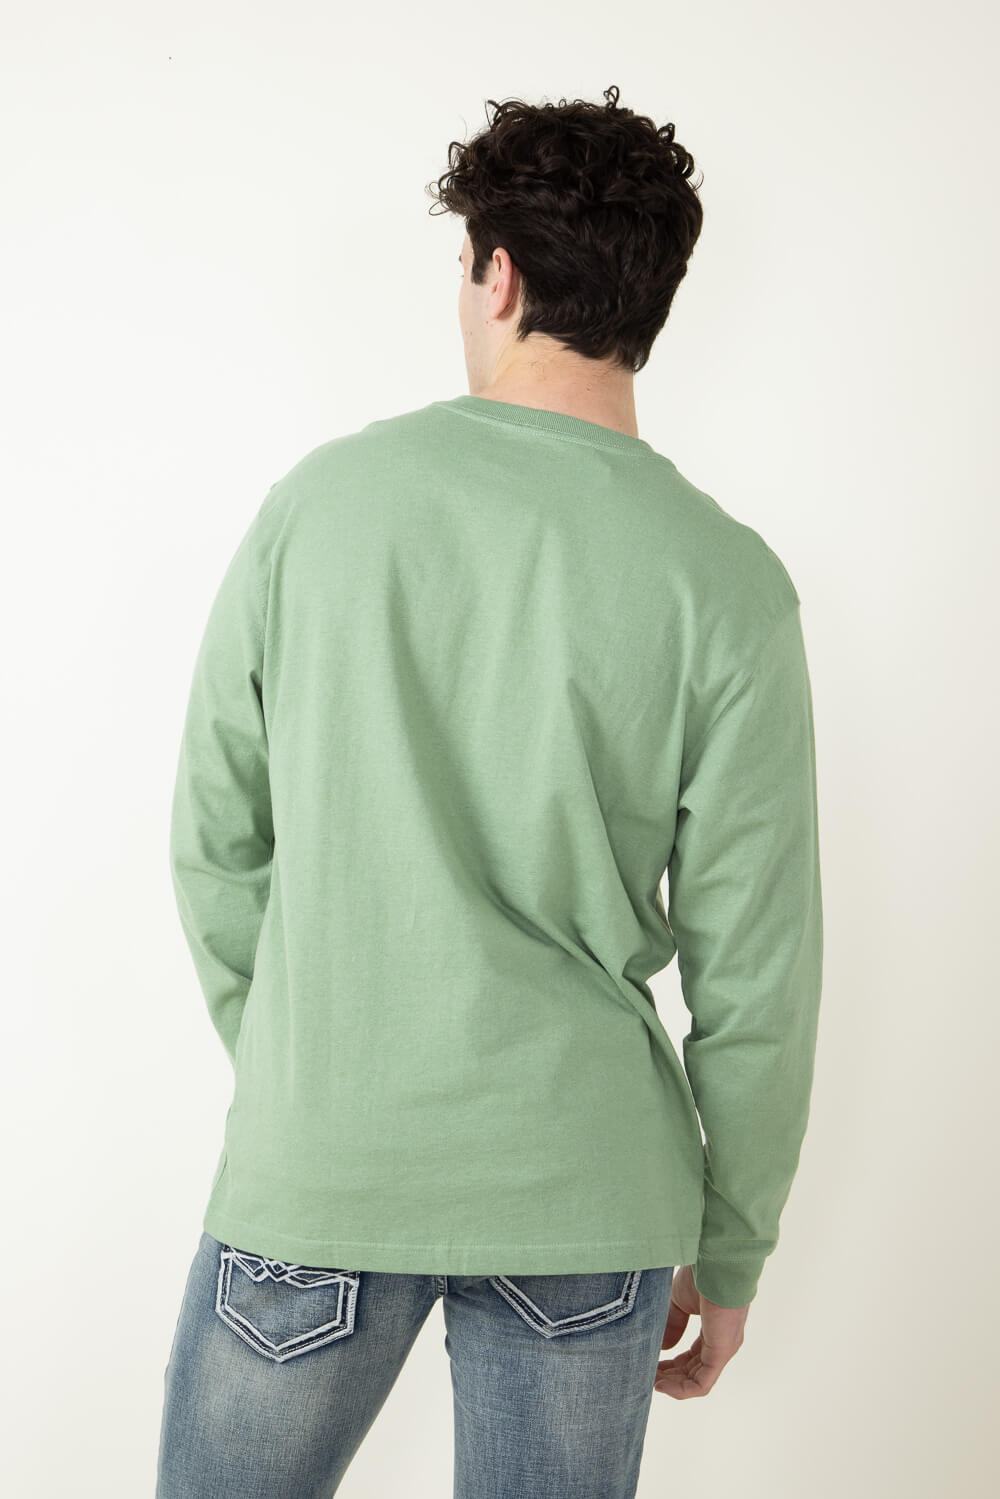 Loose Fit Heavyweight Short-Sleeve Pocket T-Shirt, Spring Sale